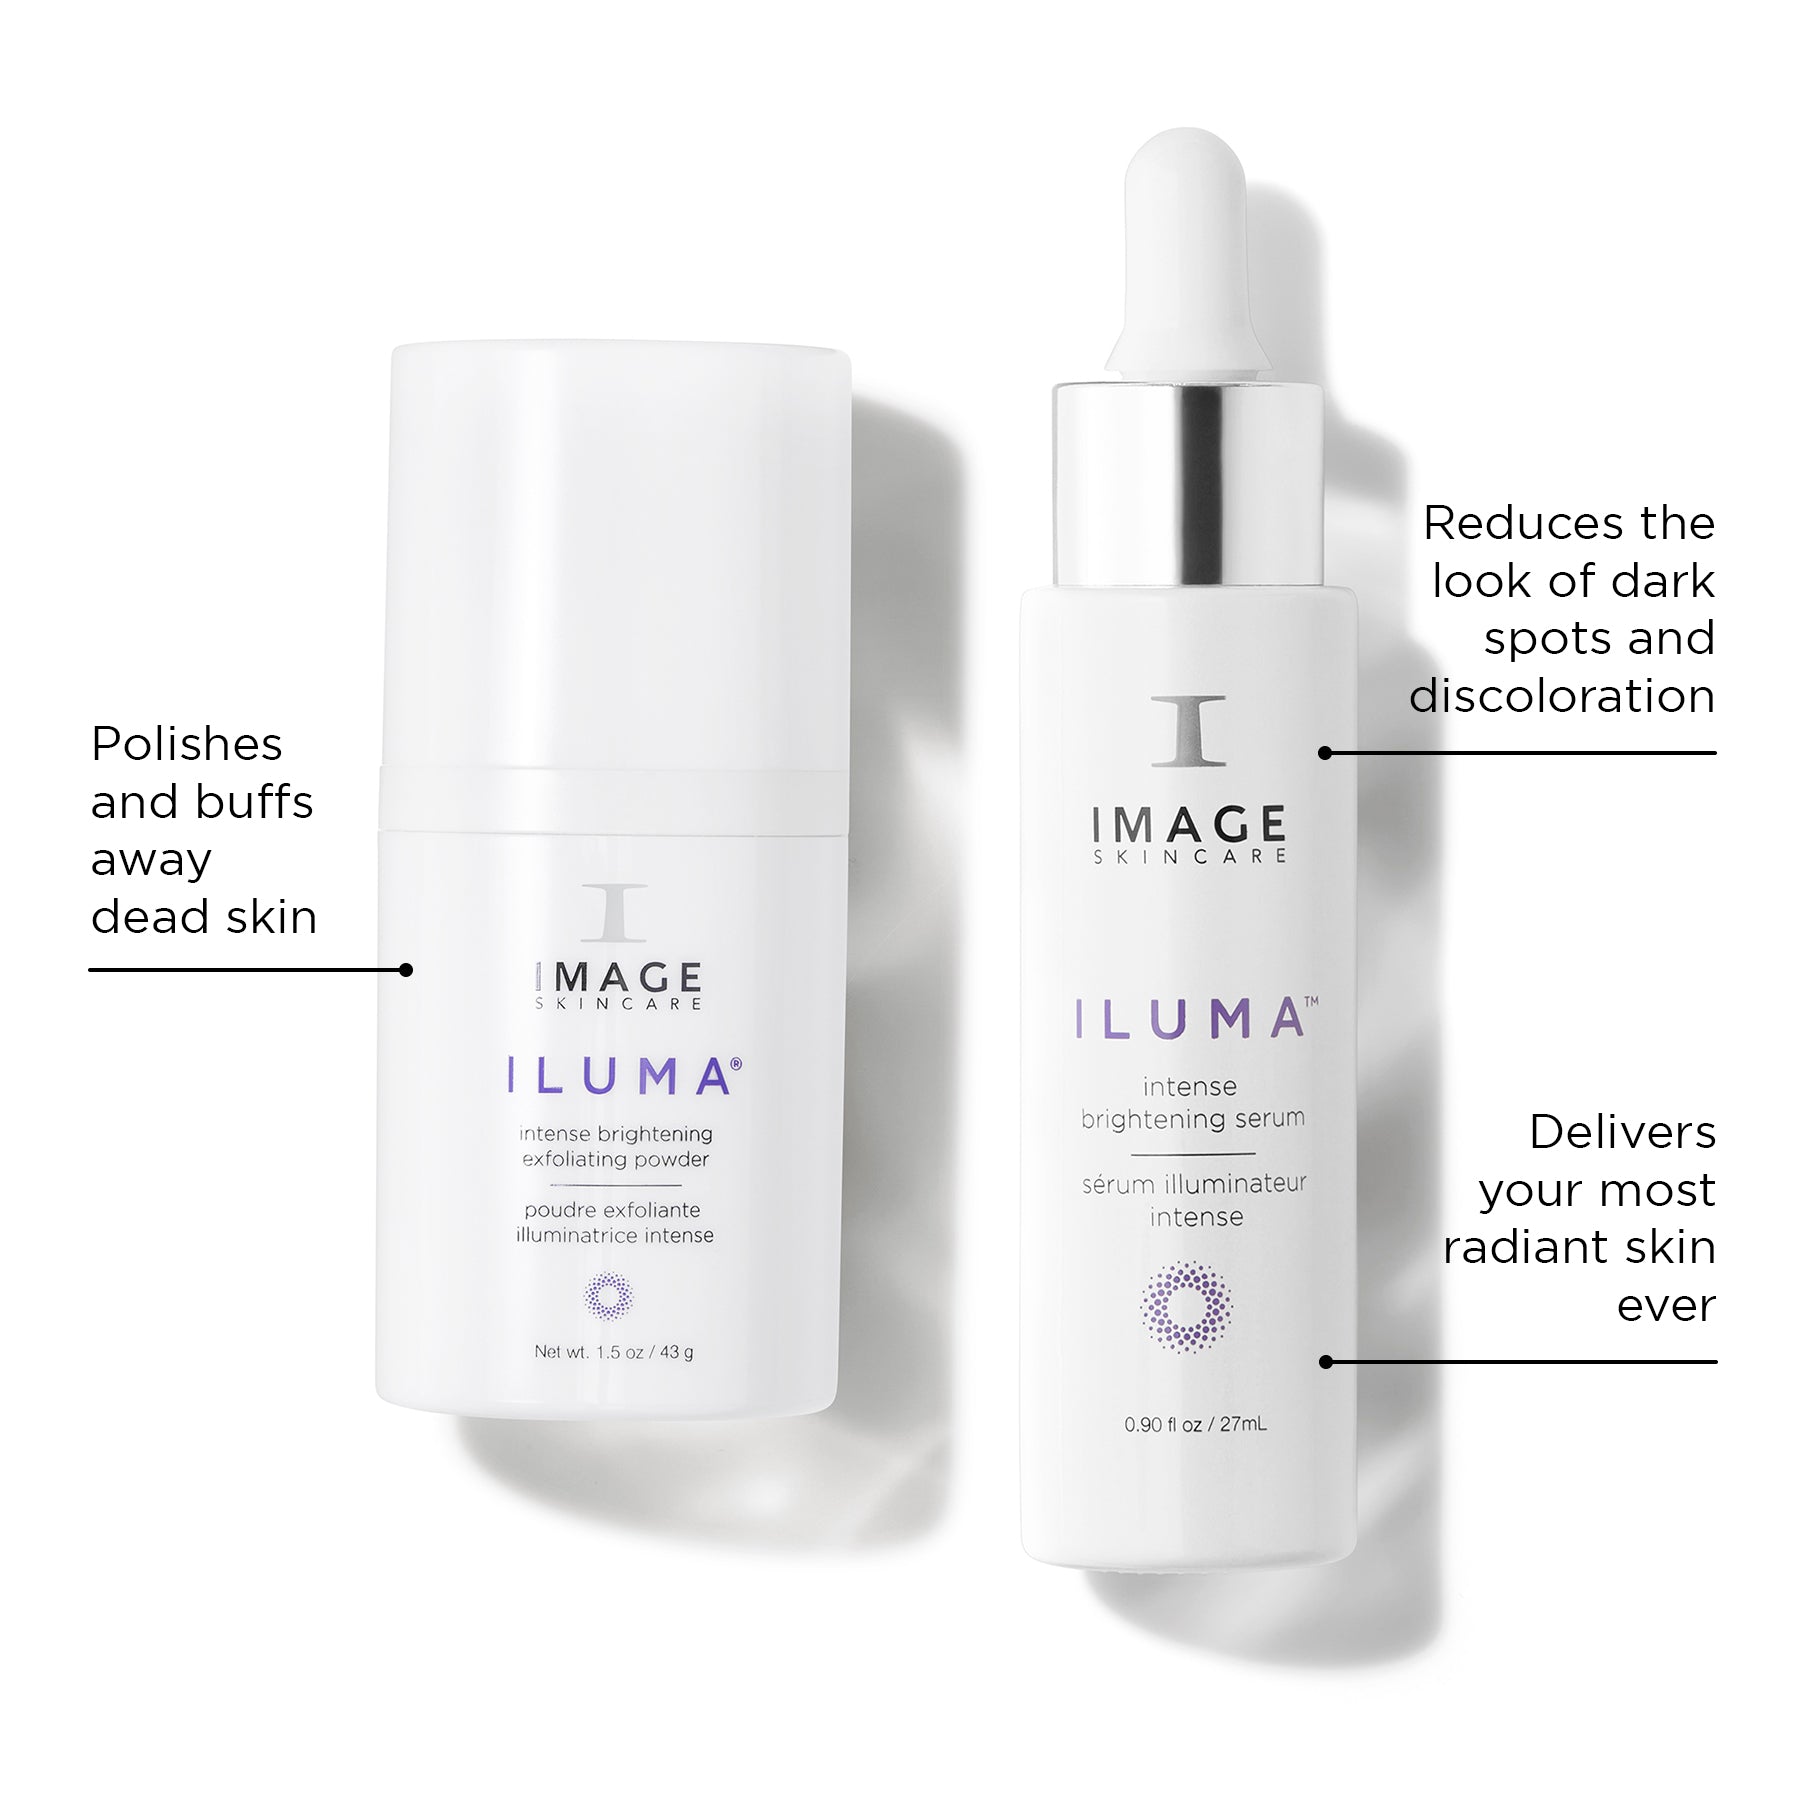 IMAGE Skincare, ILUMA Intense Facial Illuminator, Instantly Visible  Brightening Serum and Face Corrector with Vitamin C, 1 fl oz, White